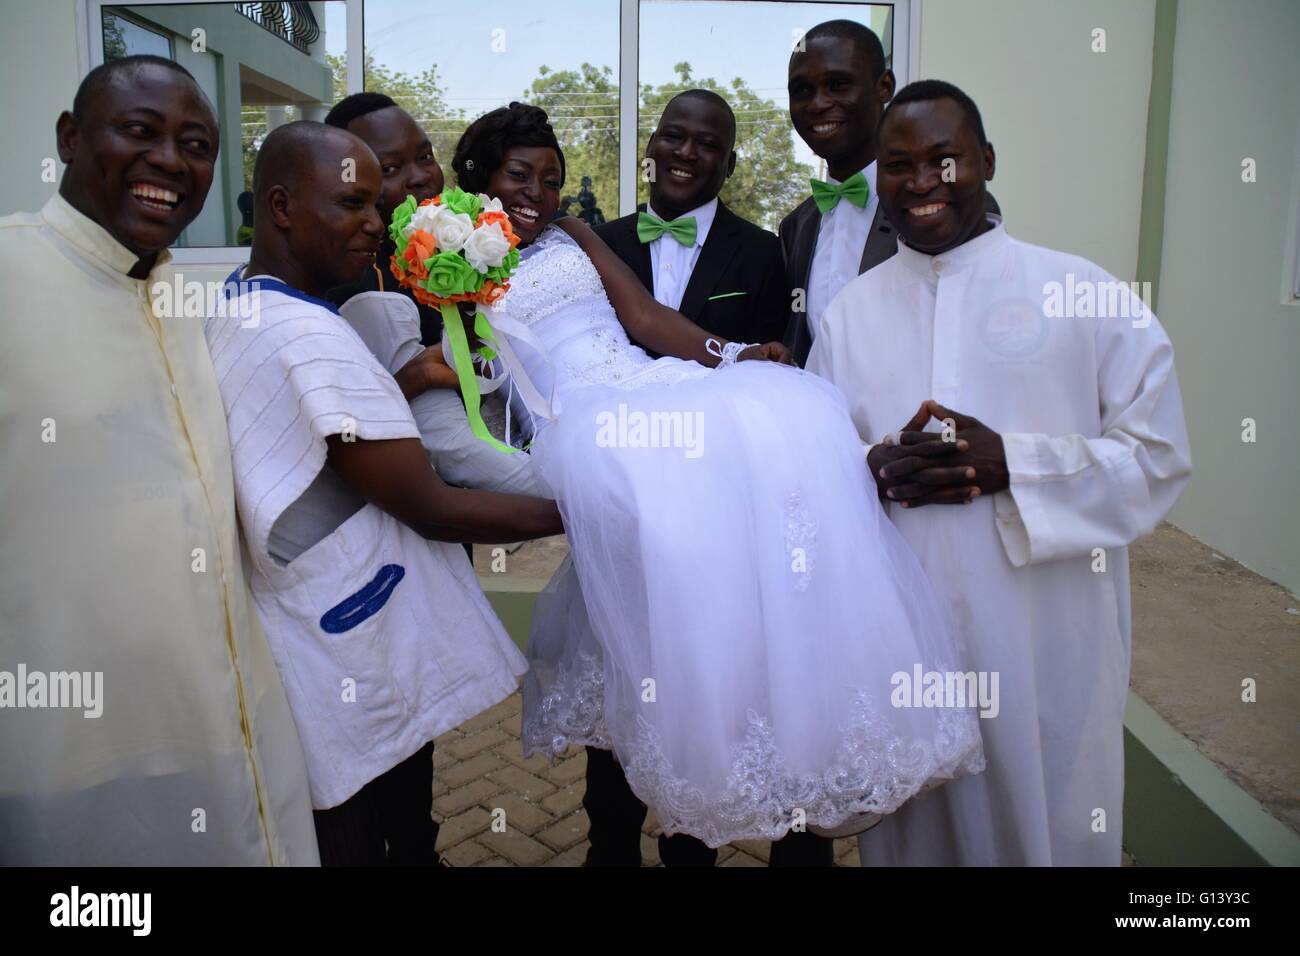 African, Catholic wedding in Bolgatanga, Ghana Stock Photo